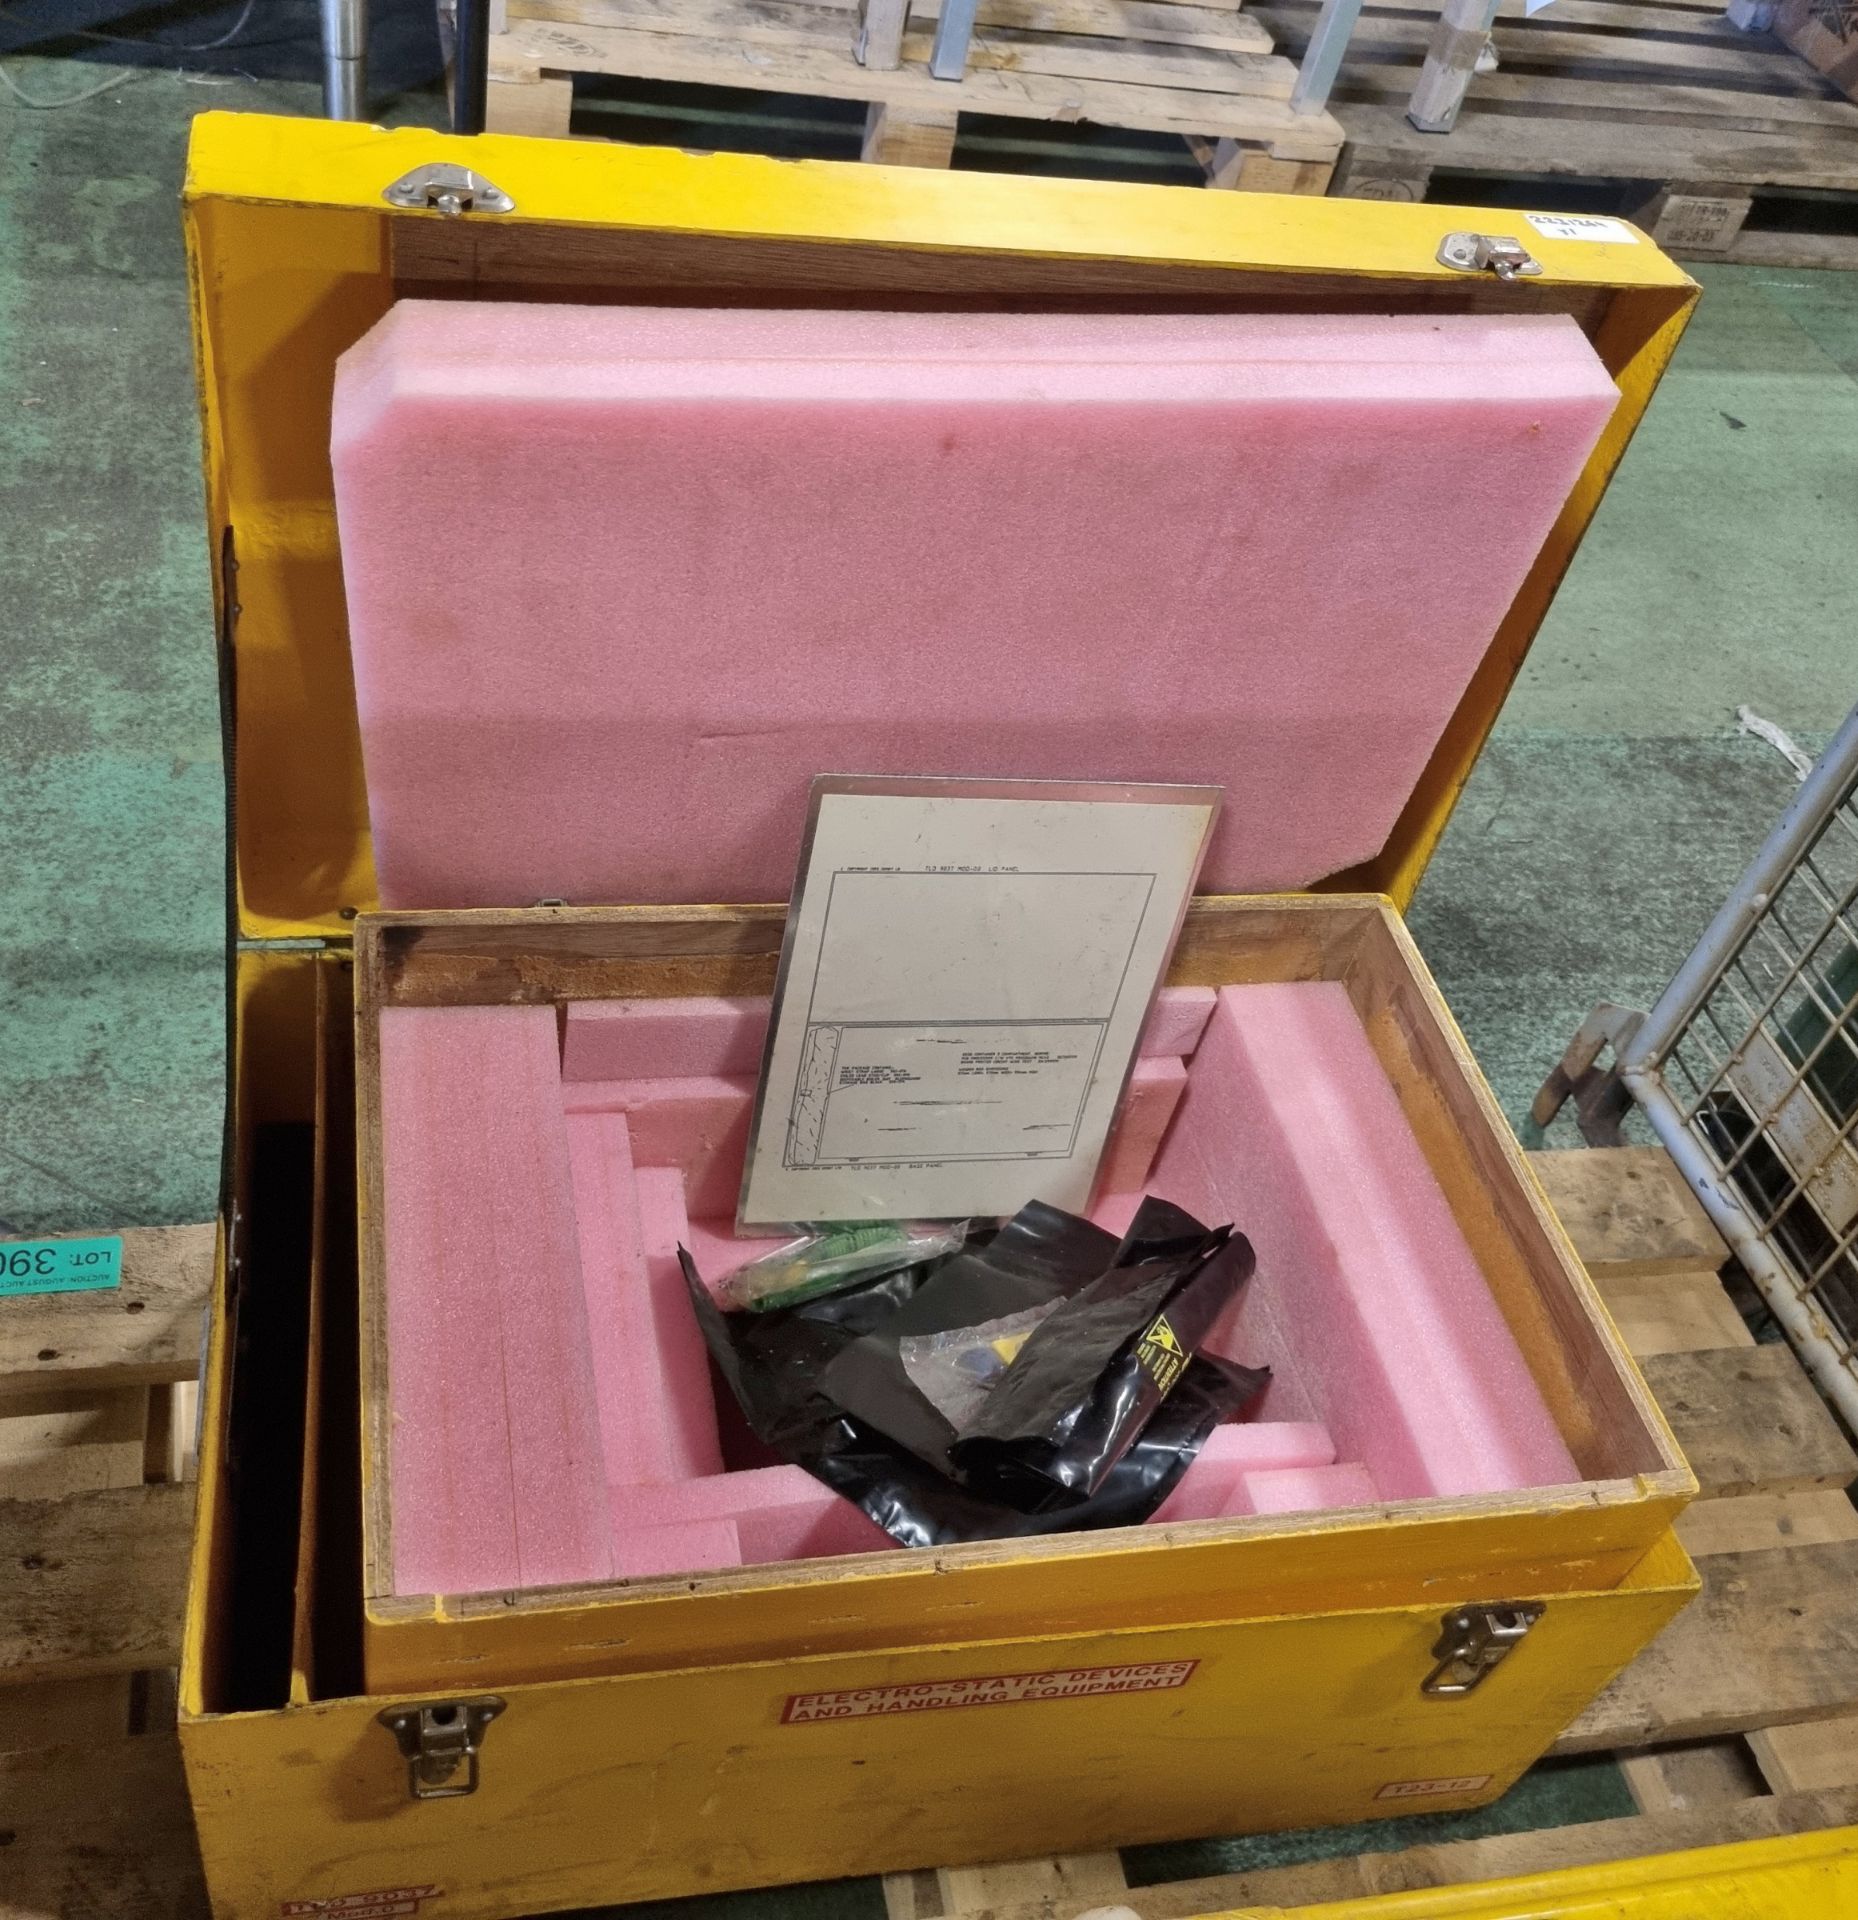 Fiberglass Tool box L66 x W40 x H33cm, Air pneumatic 70mm rotor lock nut drilling equipment & case - Image 3 of 9